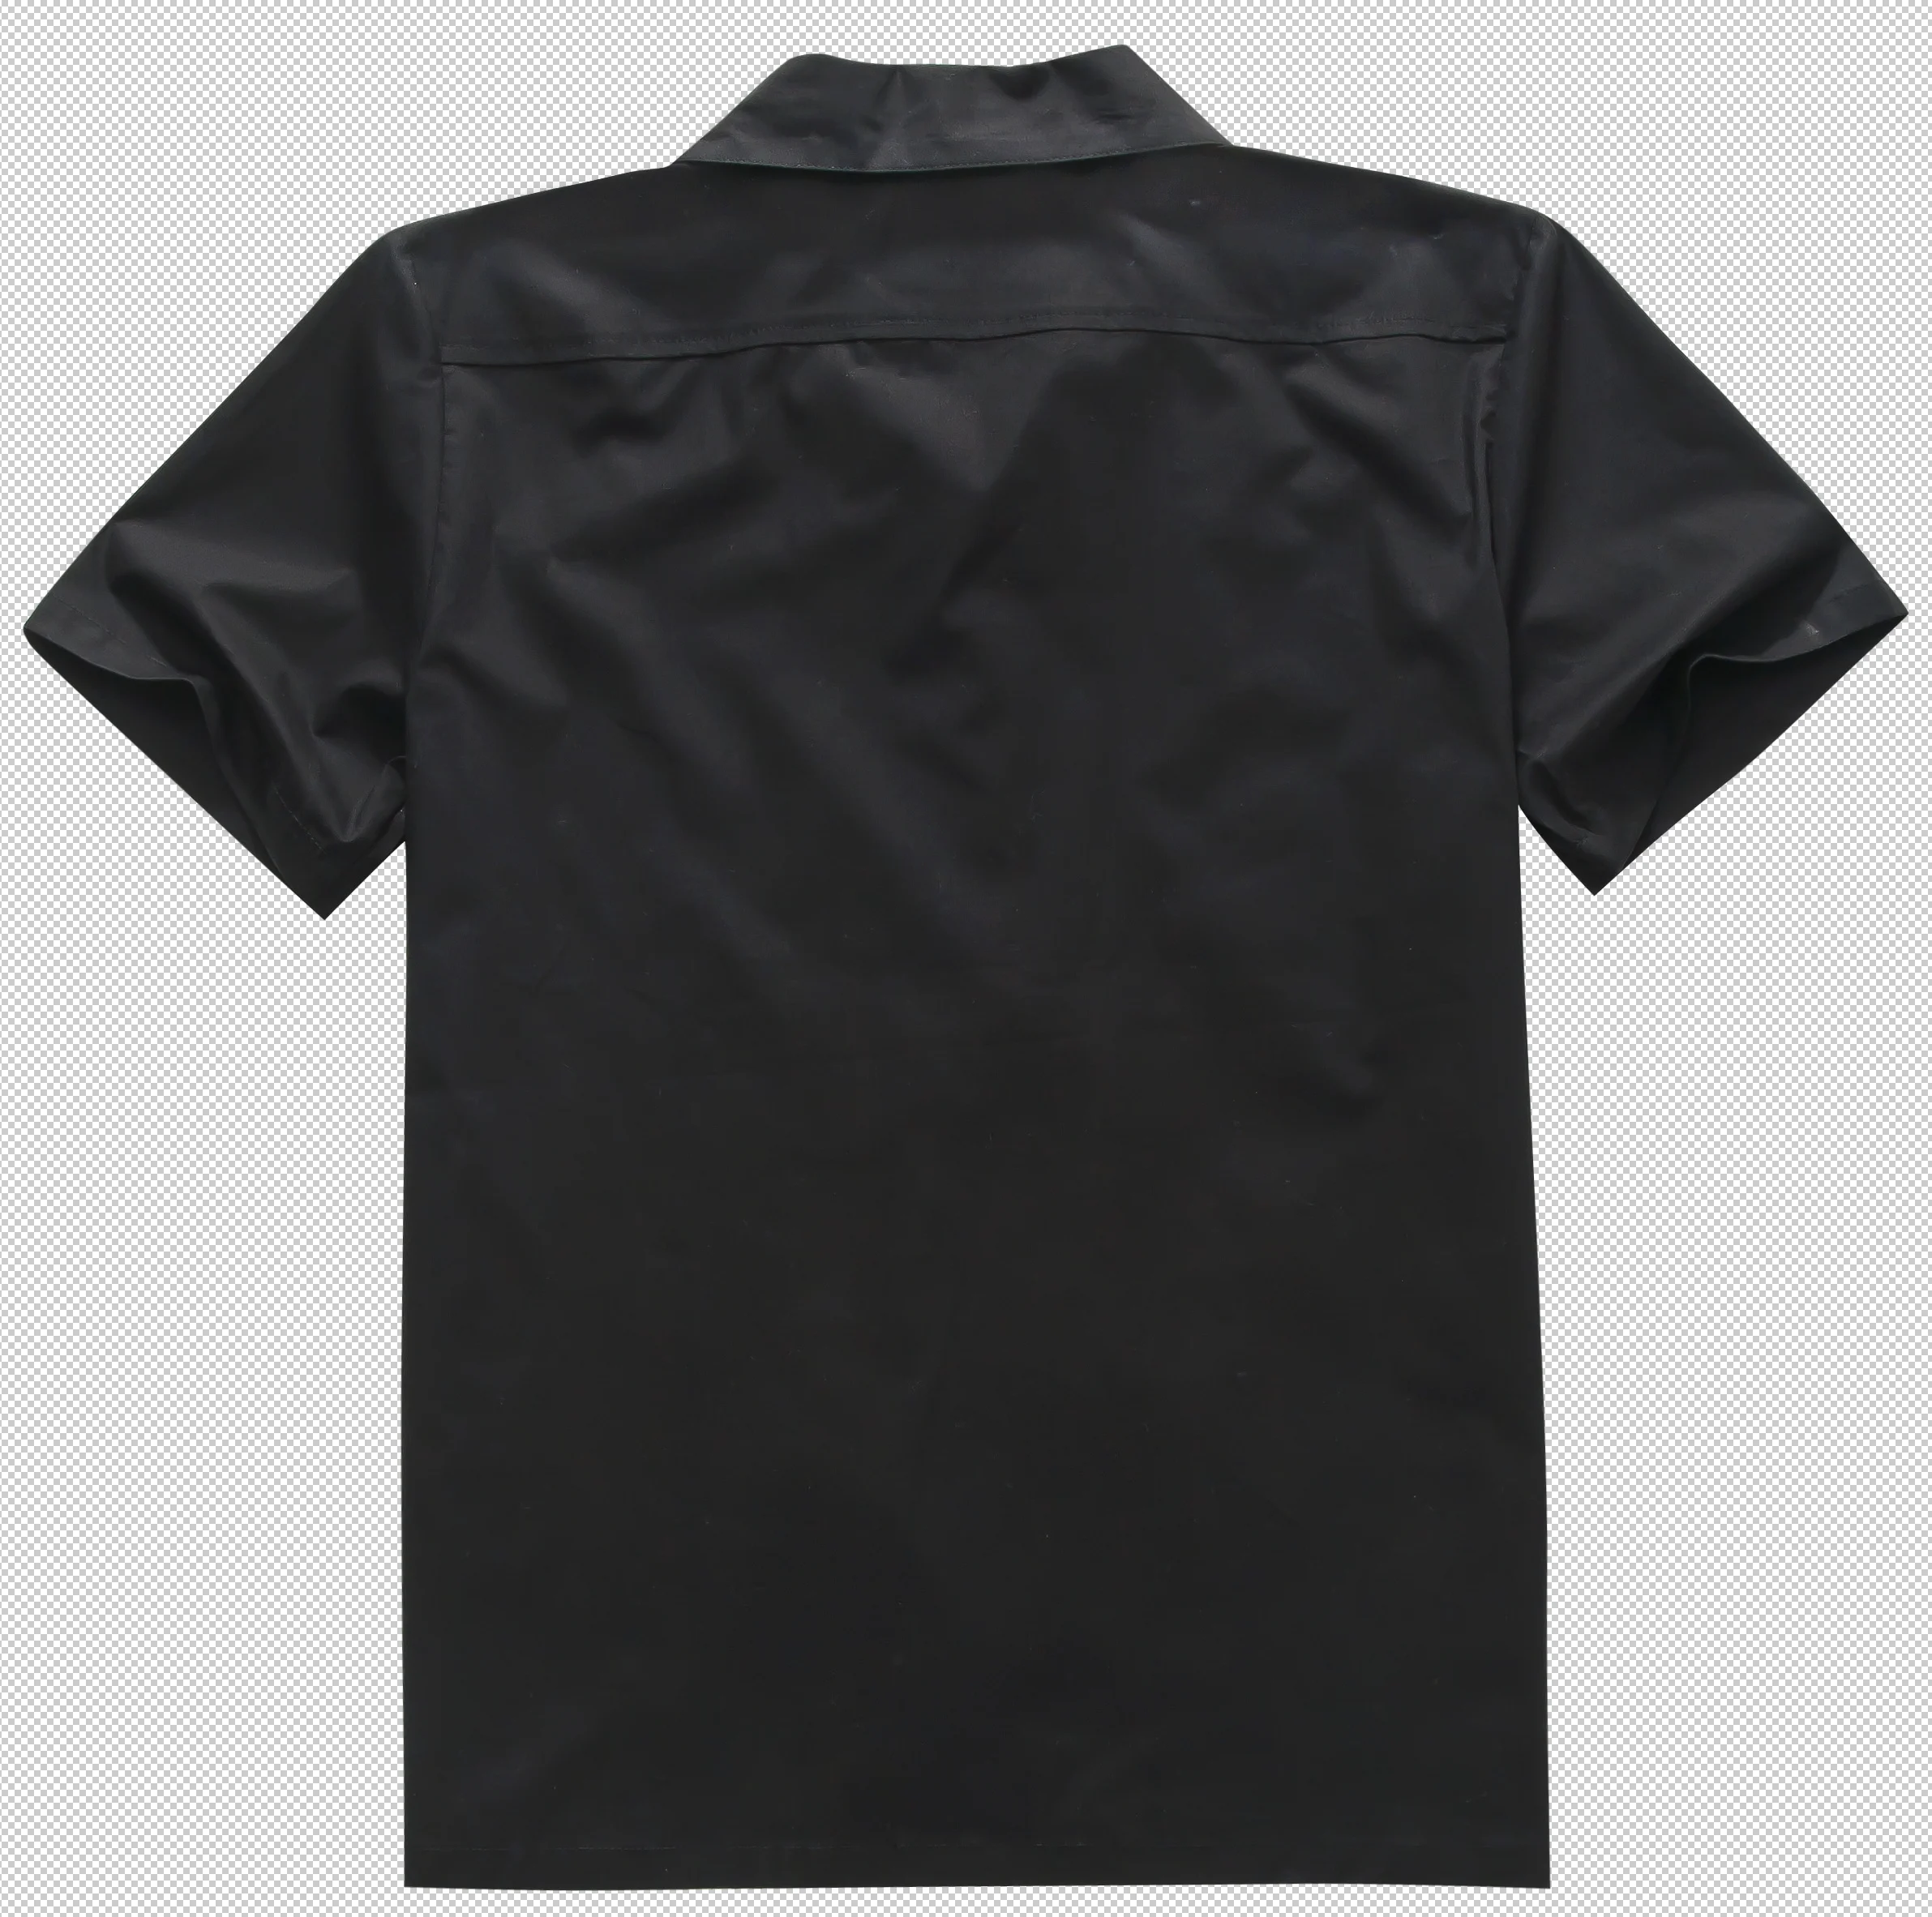 Для мужчин; хлопковые рубашки отложной воротник Винтаж рок-н-ролл хип-хоп 50-х годов одежда в стиле ретро CHEMISE Homme рокабилли рубашка